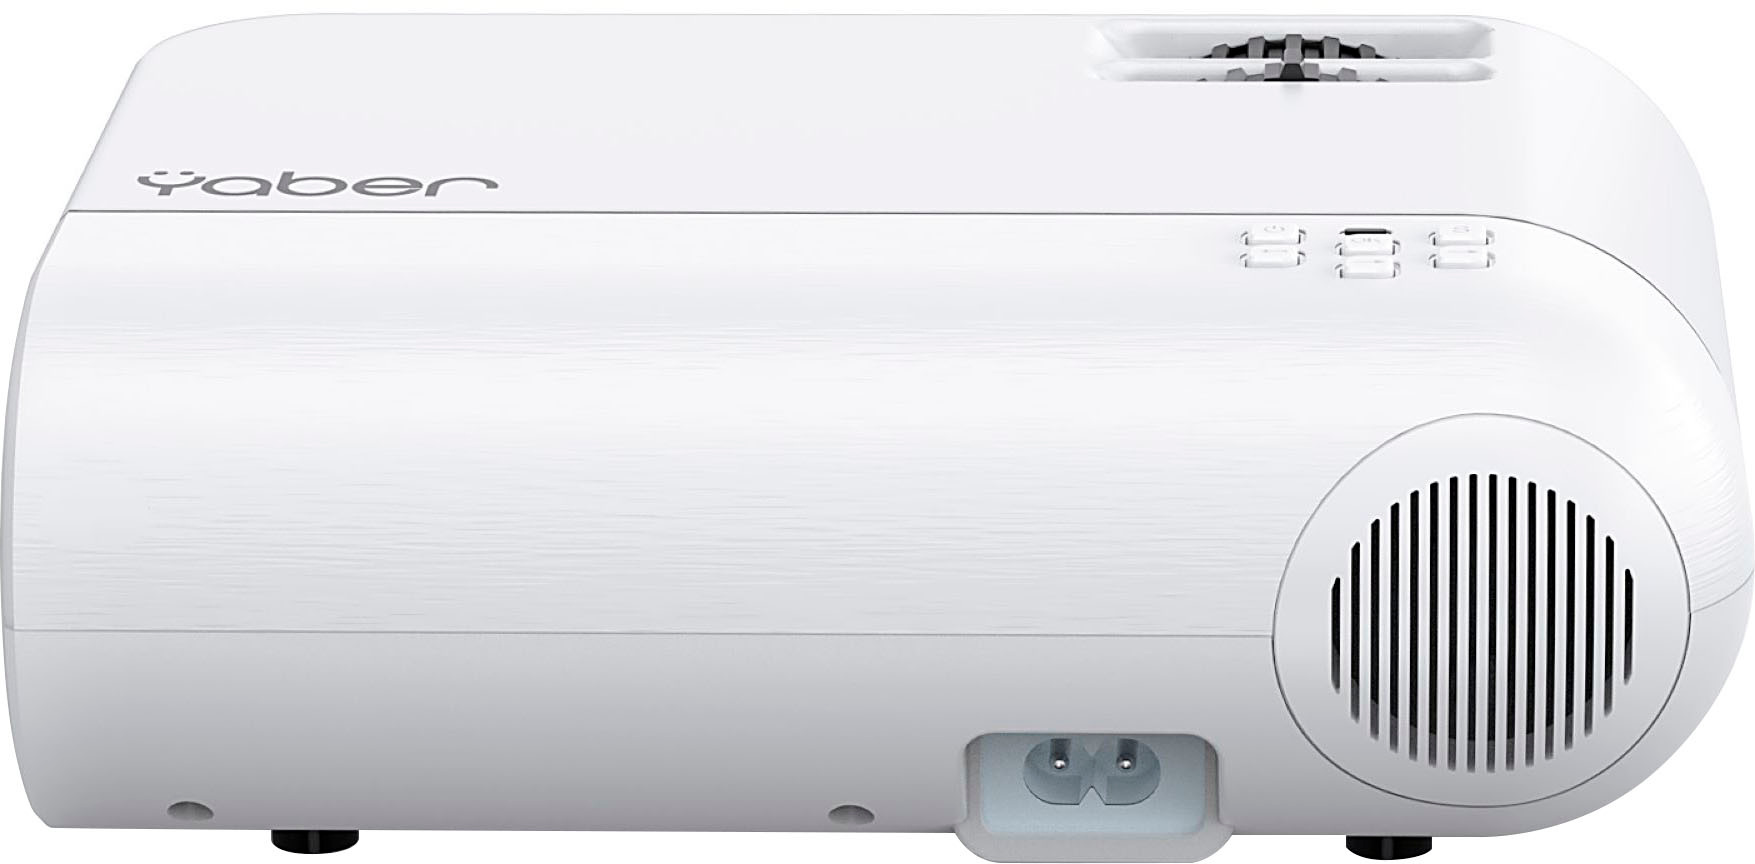 Yaber Buffalo Pro U9 1080P Wireless Entertainment Projector with Bonus  Screen Black Buffalo Pro U9 - Best Buy